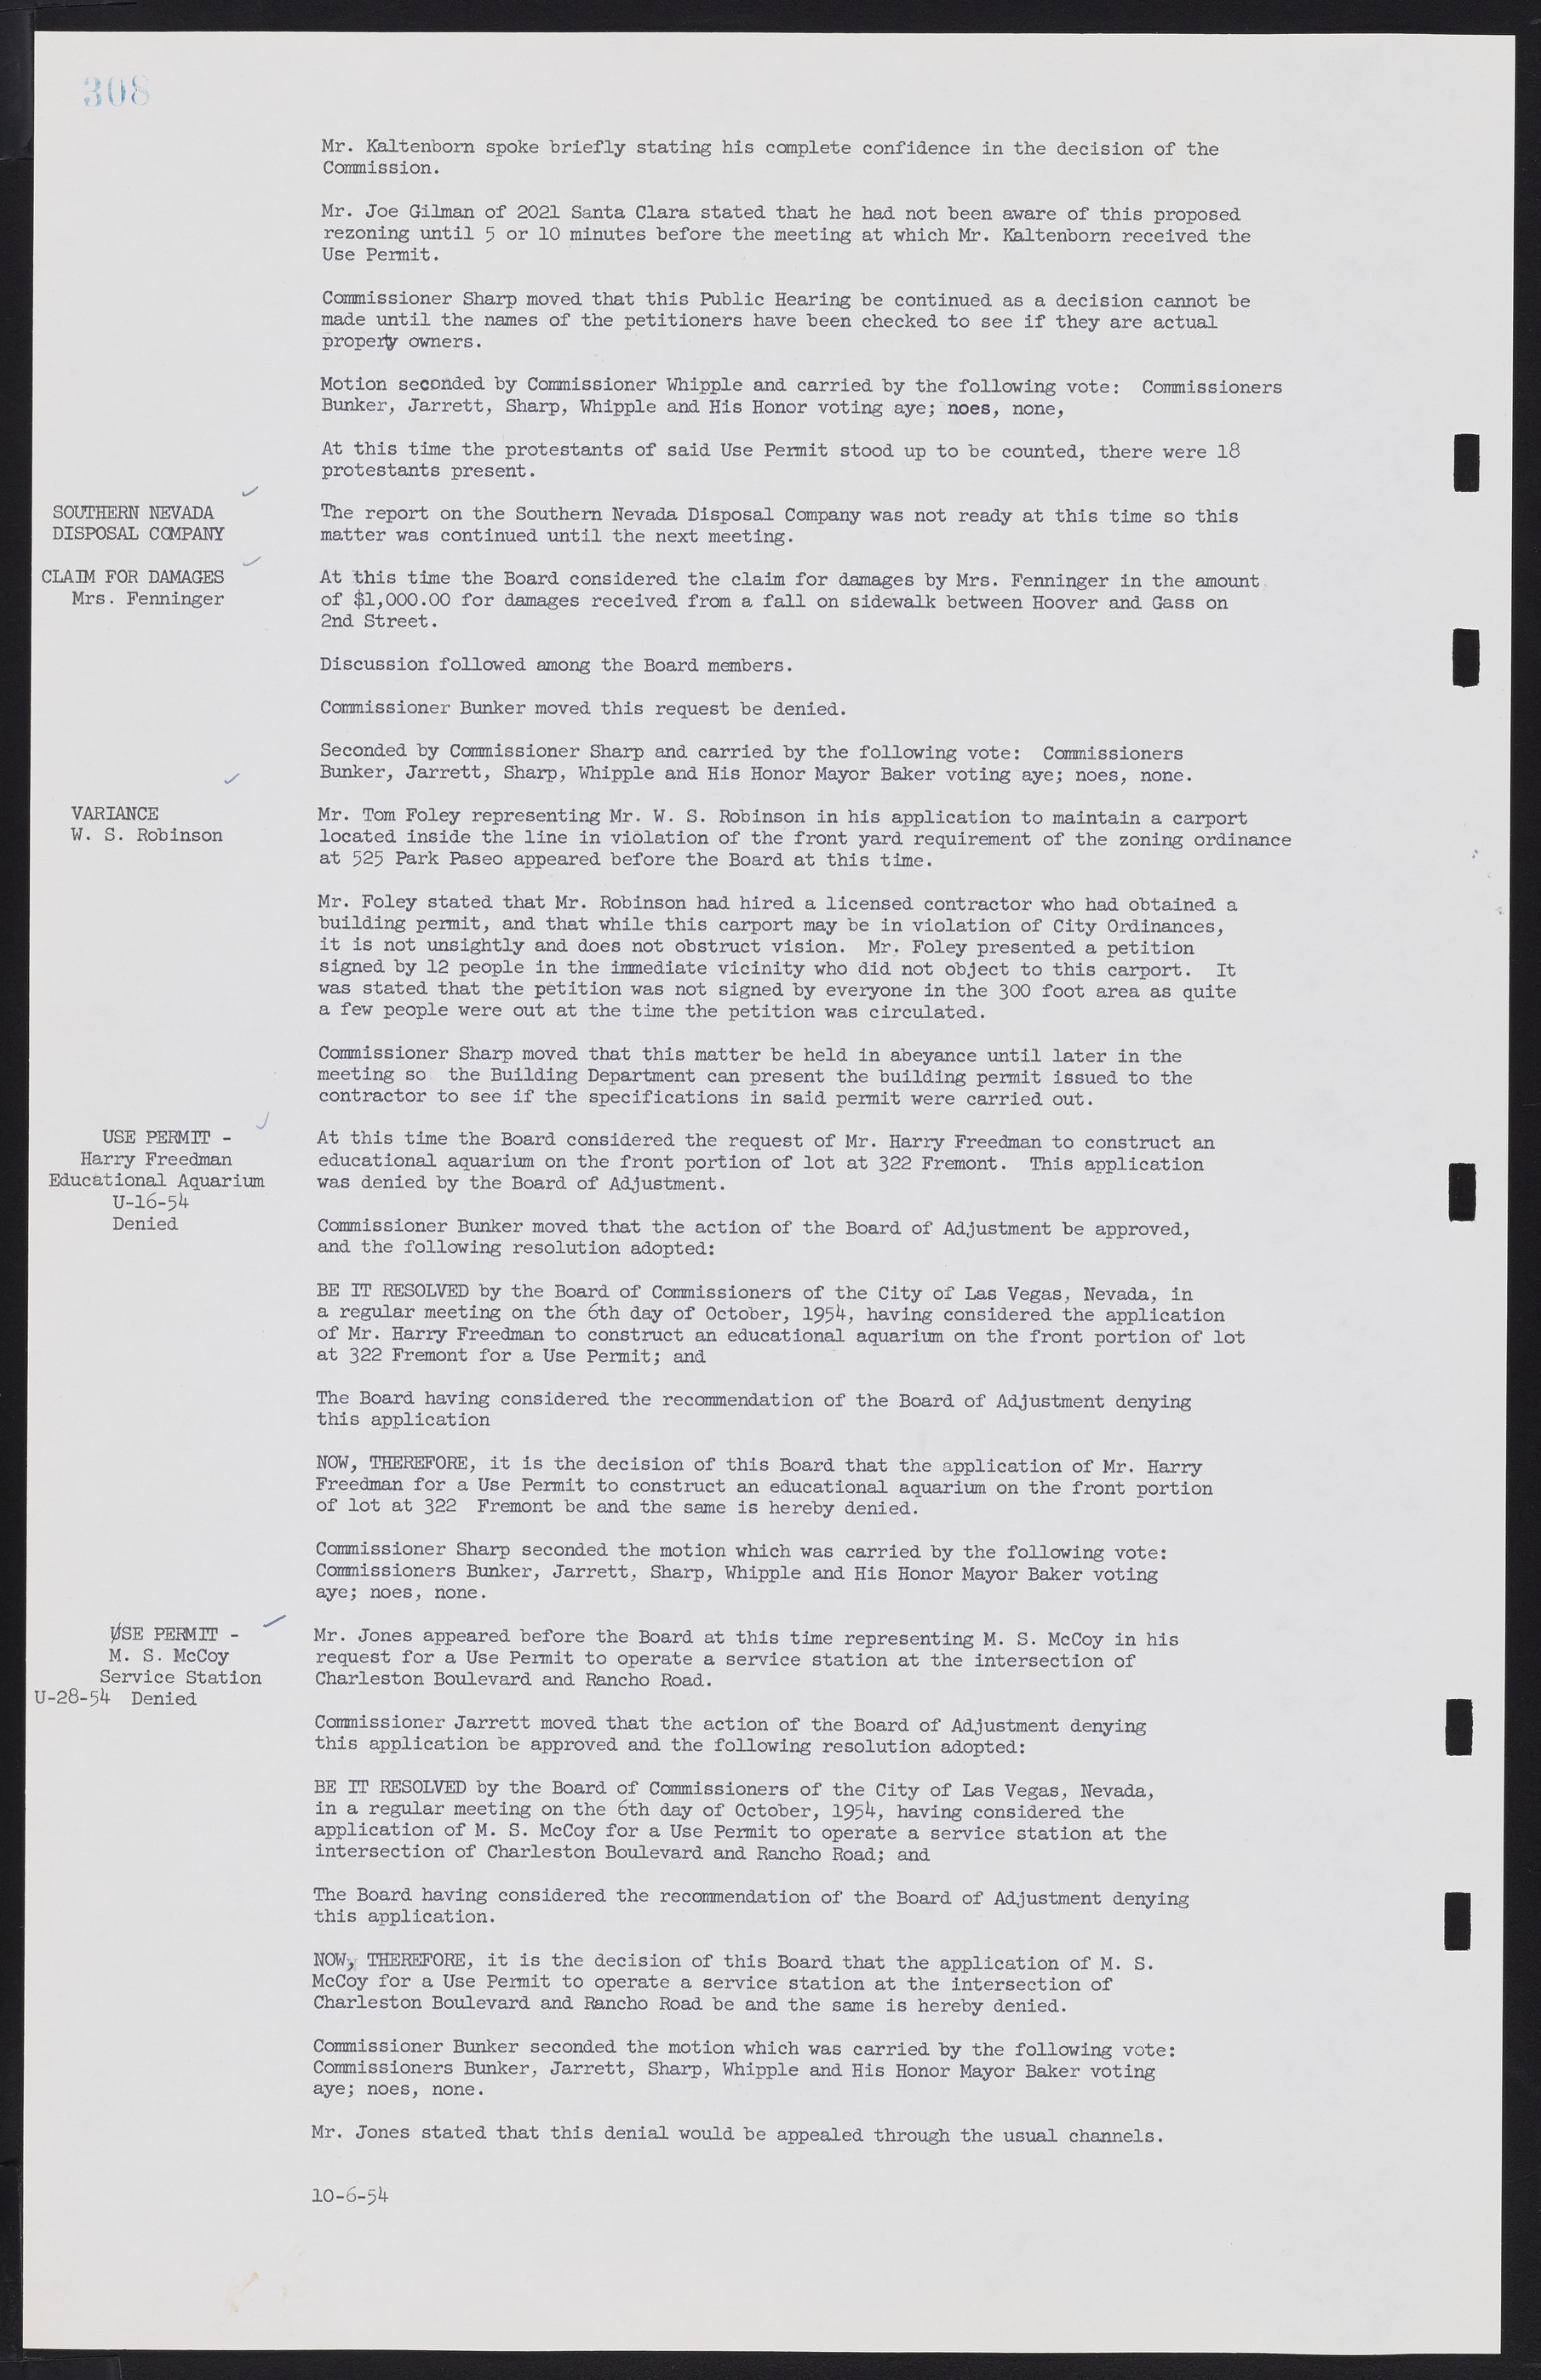 Las Vegas City Commission Minutes, February 17, 1954 to September 21, 1955, lvc000009-314